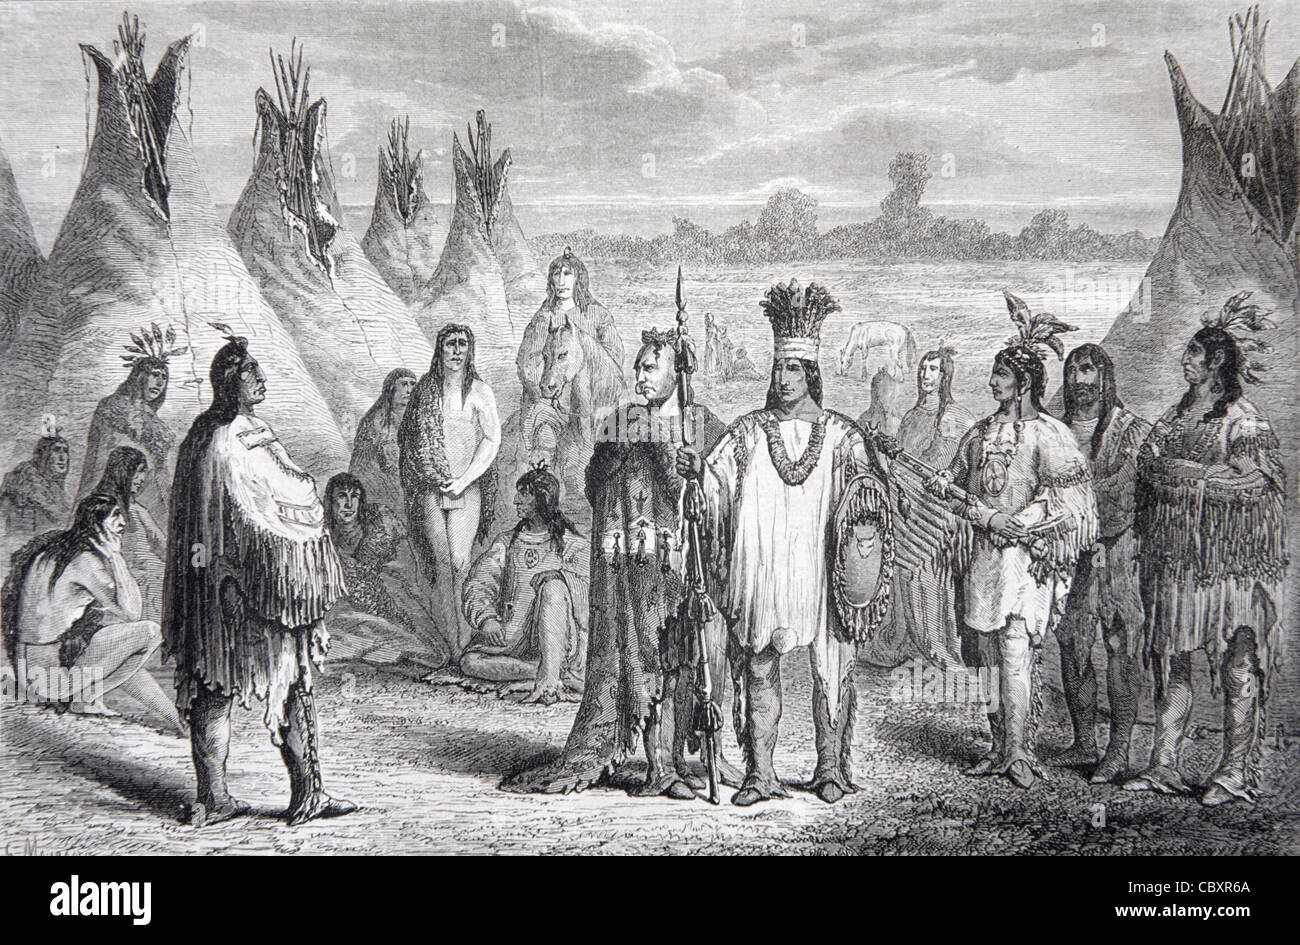 Cree Indian Chief & Family Tribe unter Tepees oder Tipis, Kanada. 1860 Gravieren oder Vintage Illustration Stockfoto